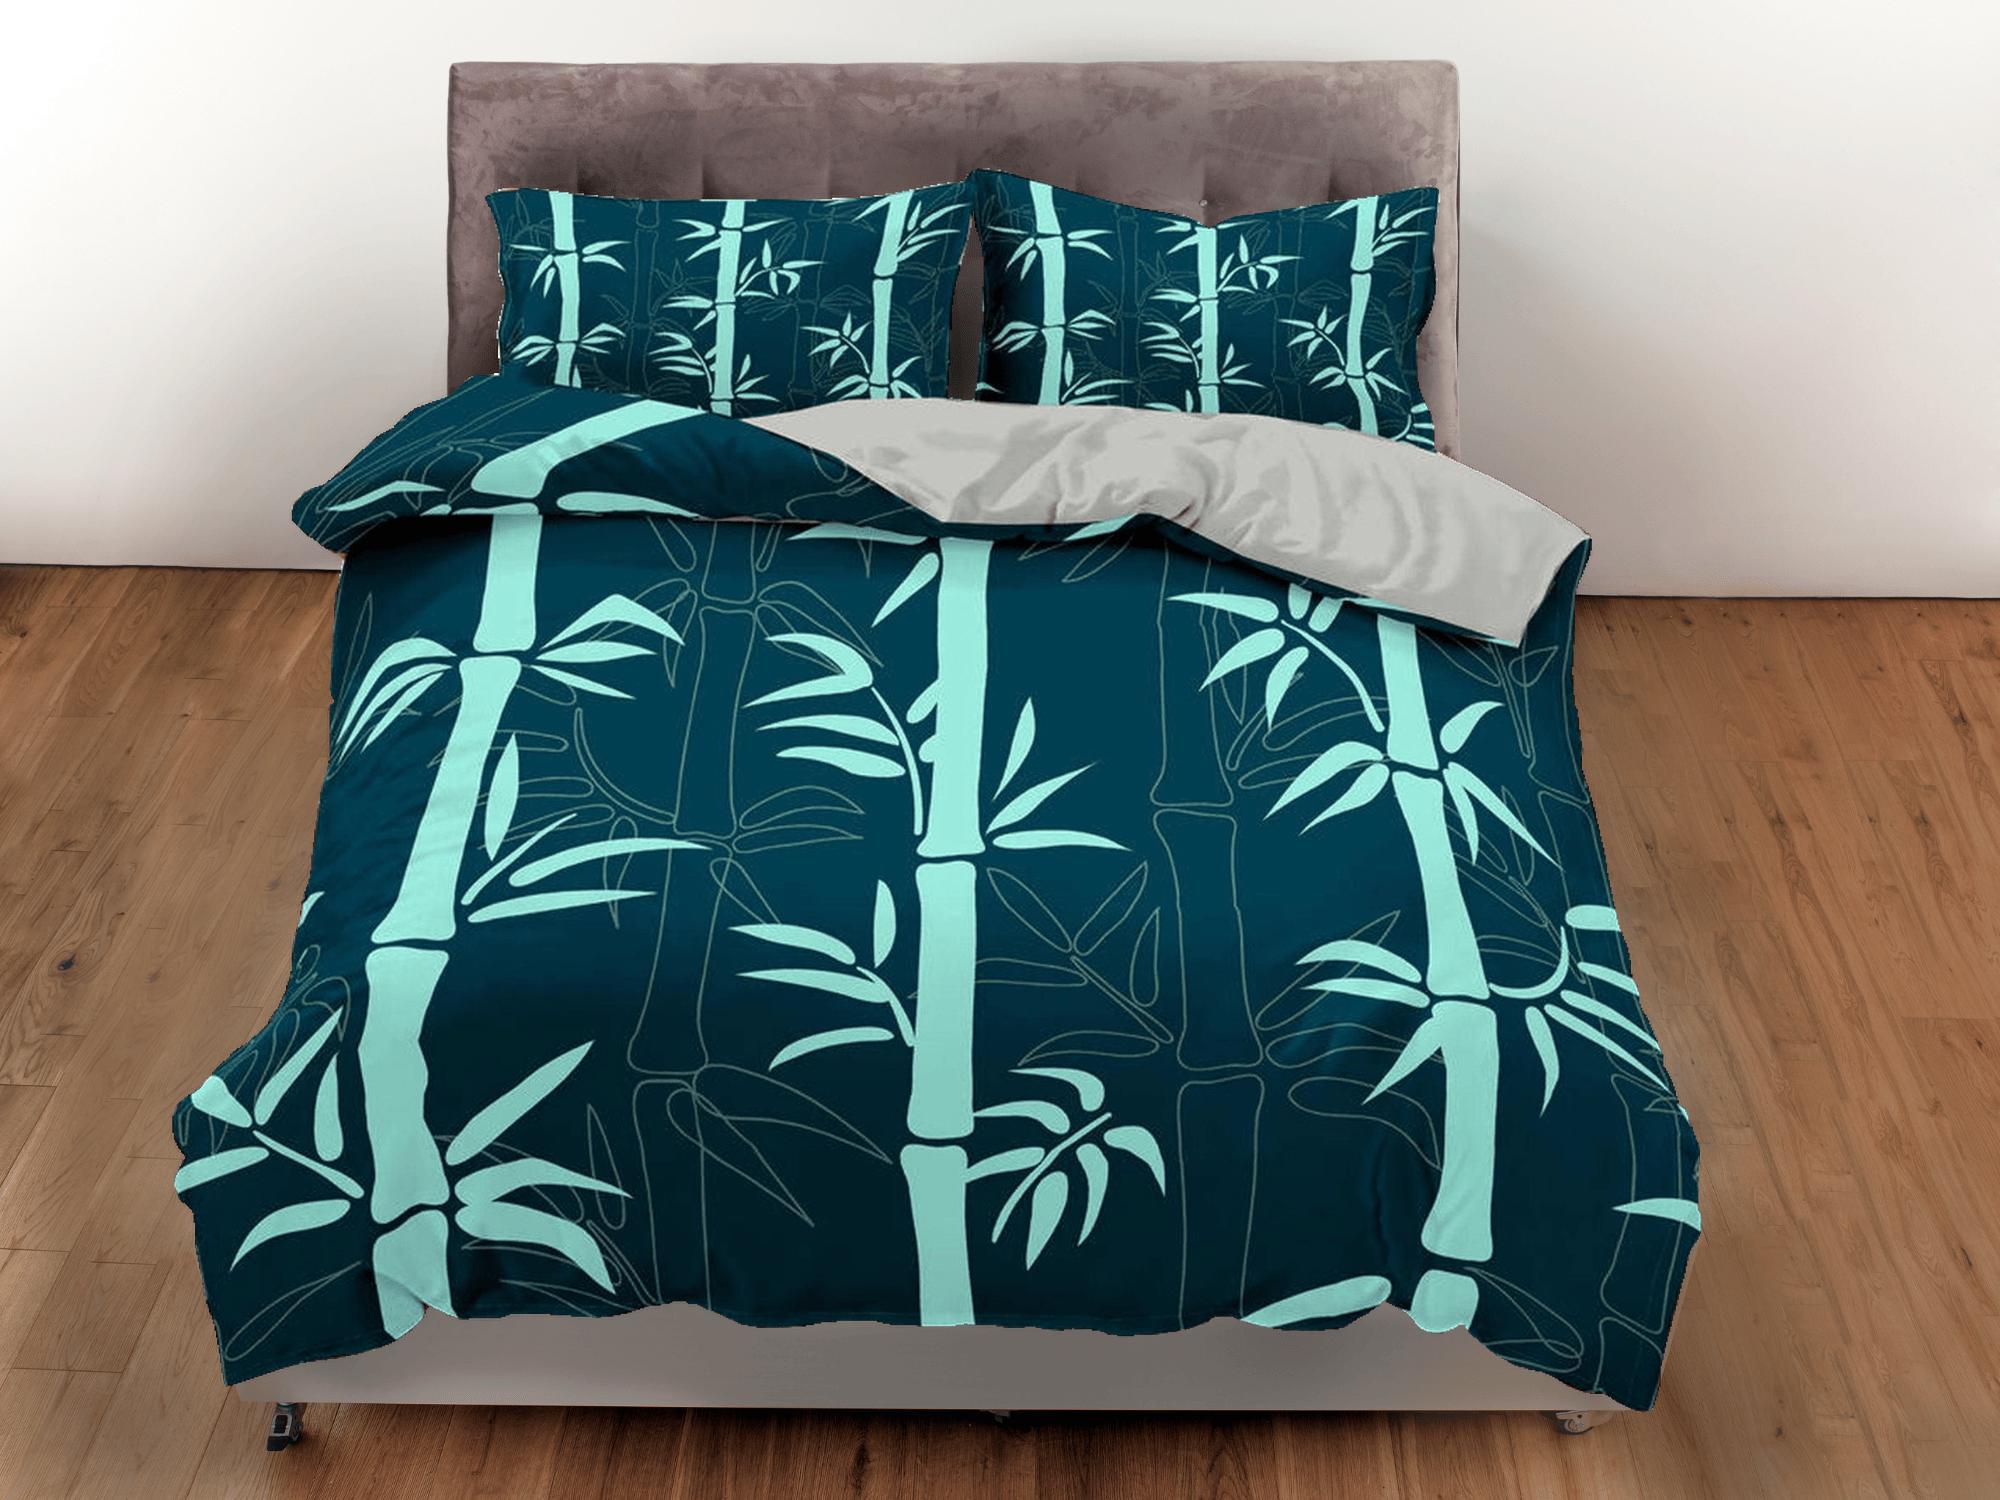 daintyduvet Botanical Duvet Cover Set Lucky Bamboo, Green Bedspread Dorm Bedding Set